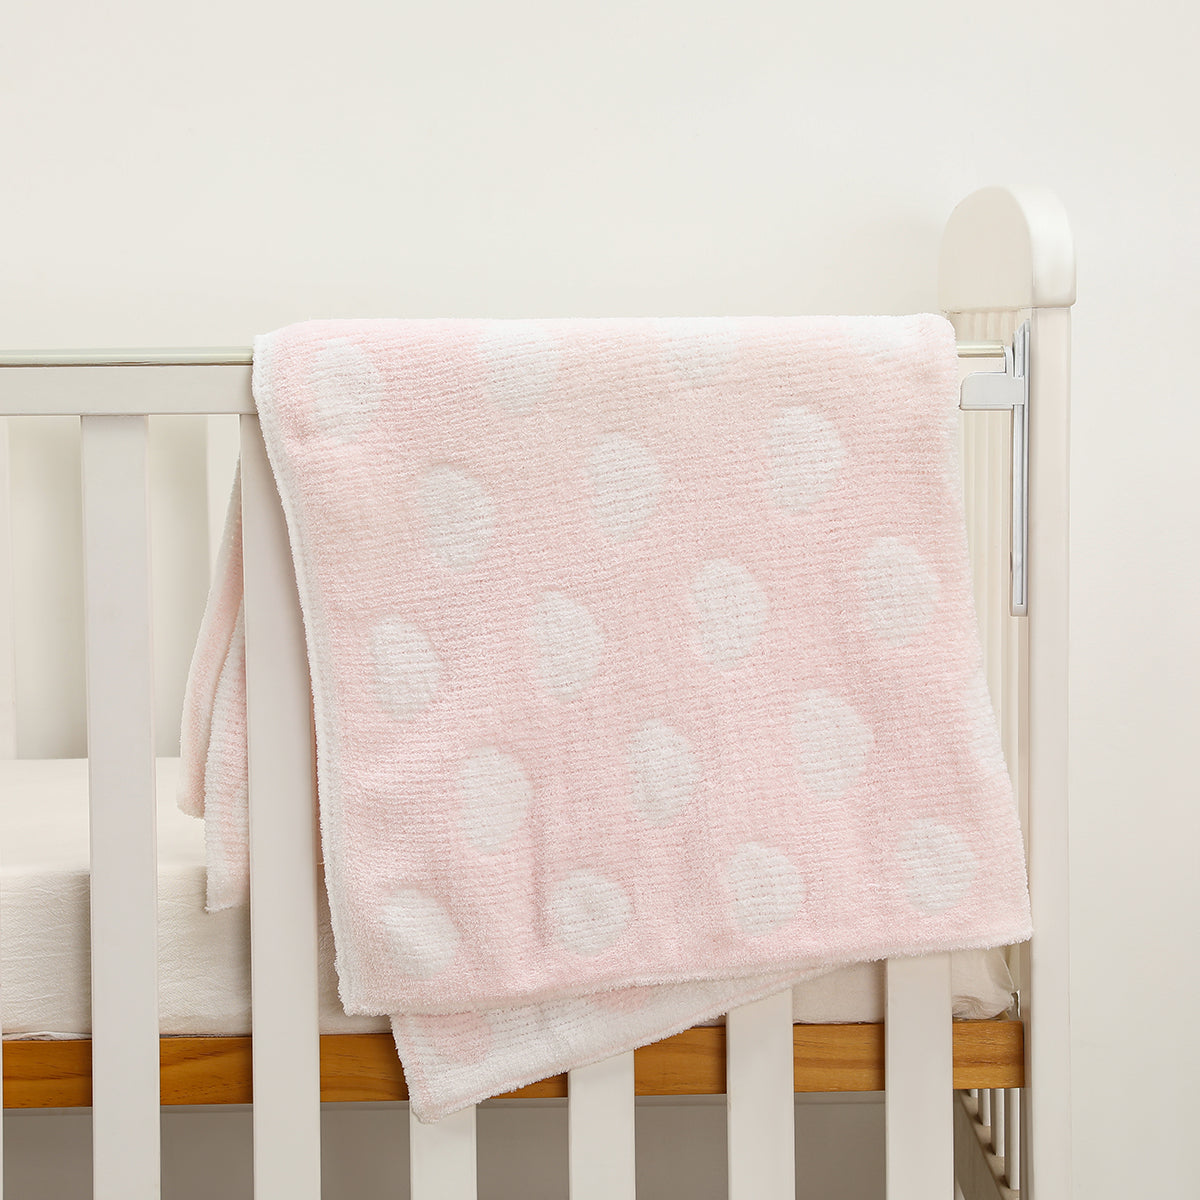 PurePetali Pink Heart Baby Blanket